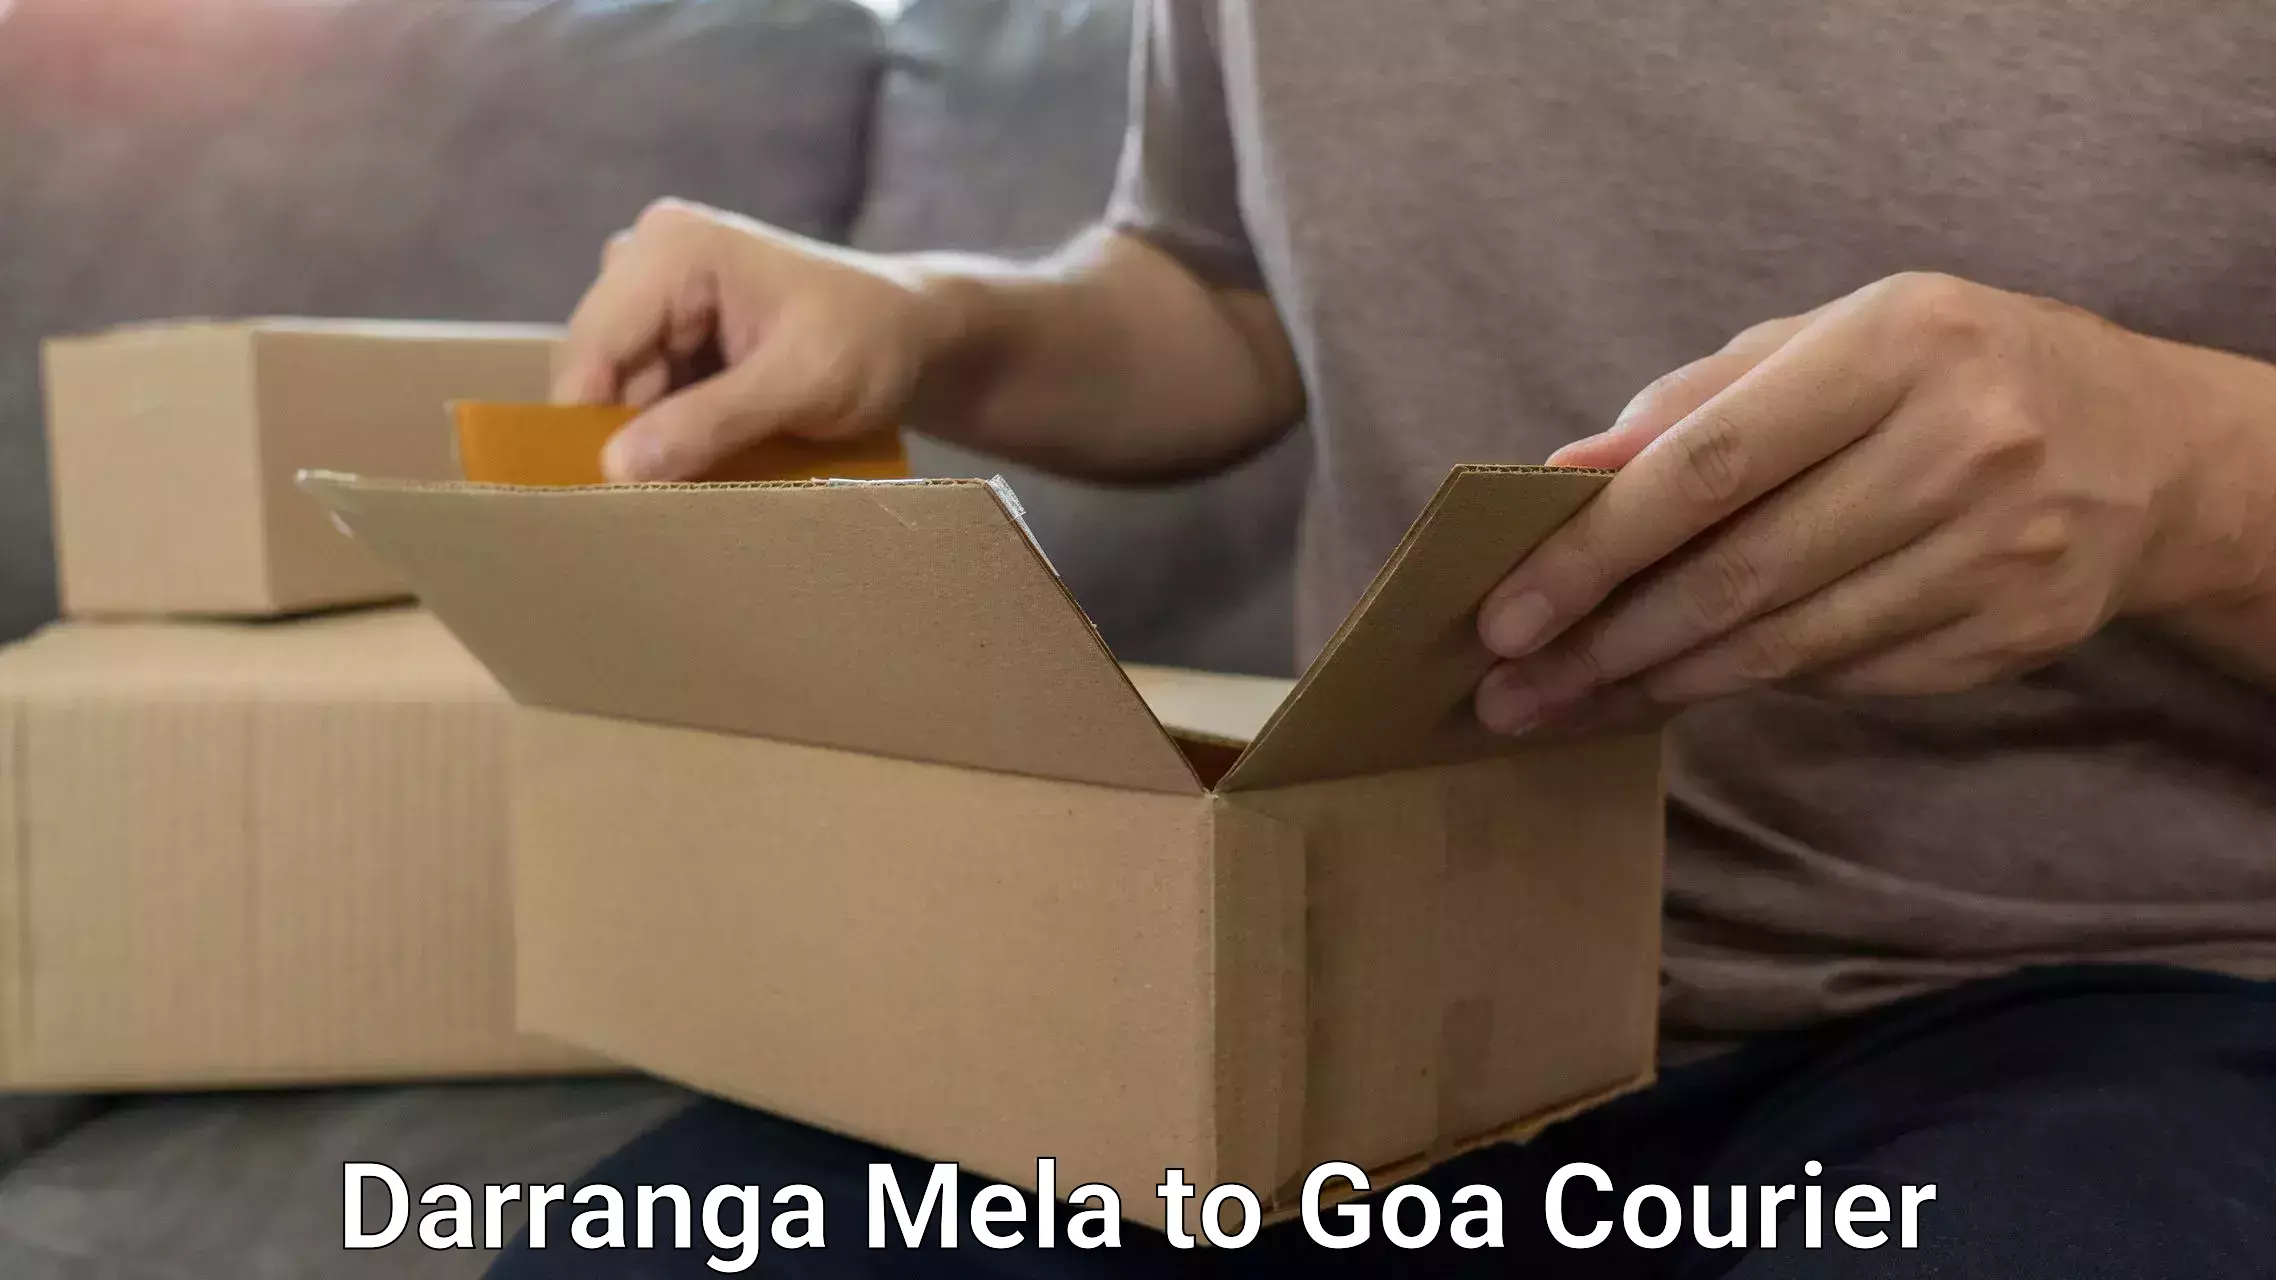 Baggage shipping service Darranga Mela to Goa